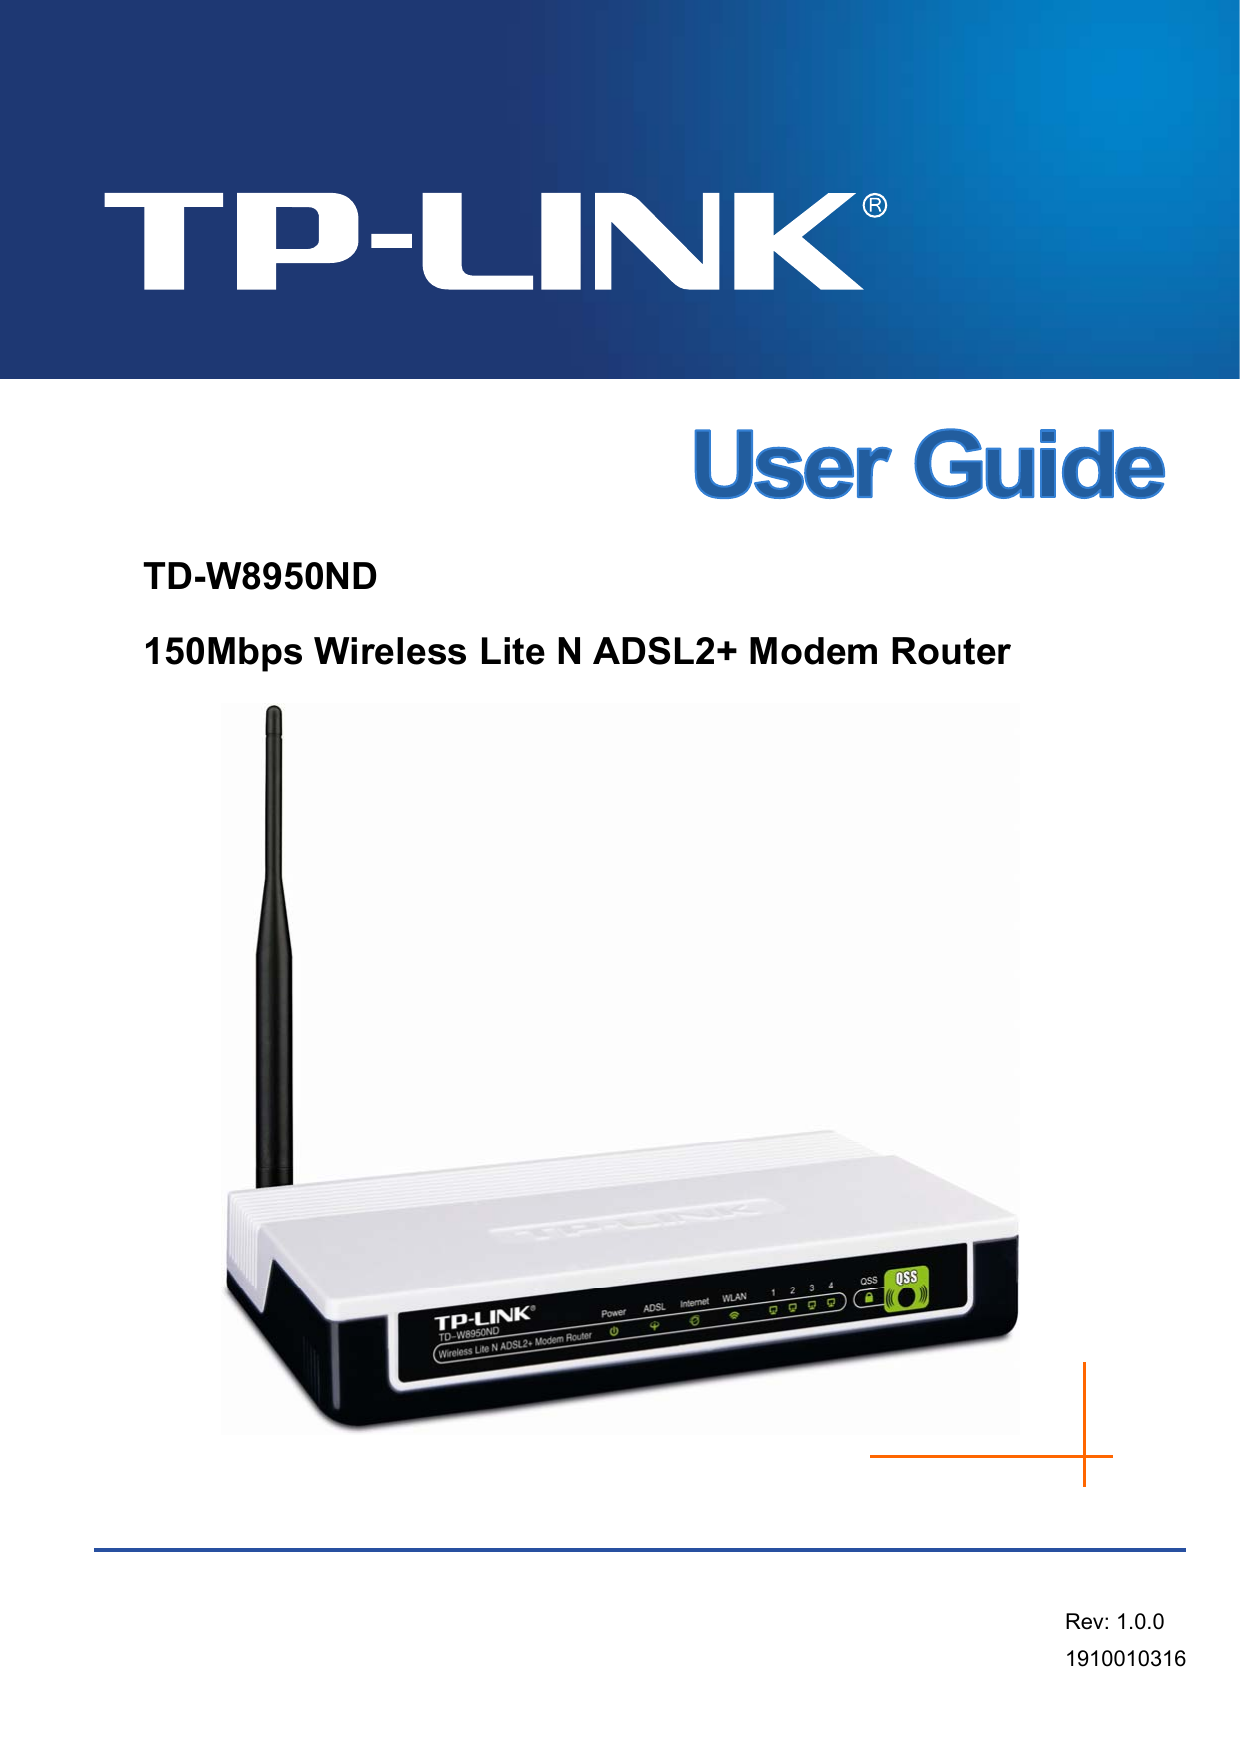    TD-W8950ND 150Mbps Wireless Lite N ADSL2+ Modem Router Rev: 1.0.0 1910010316 